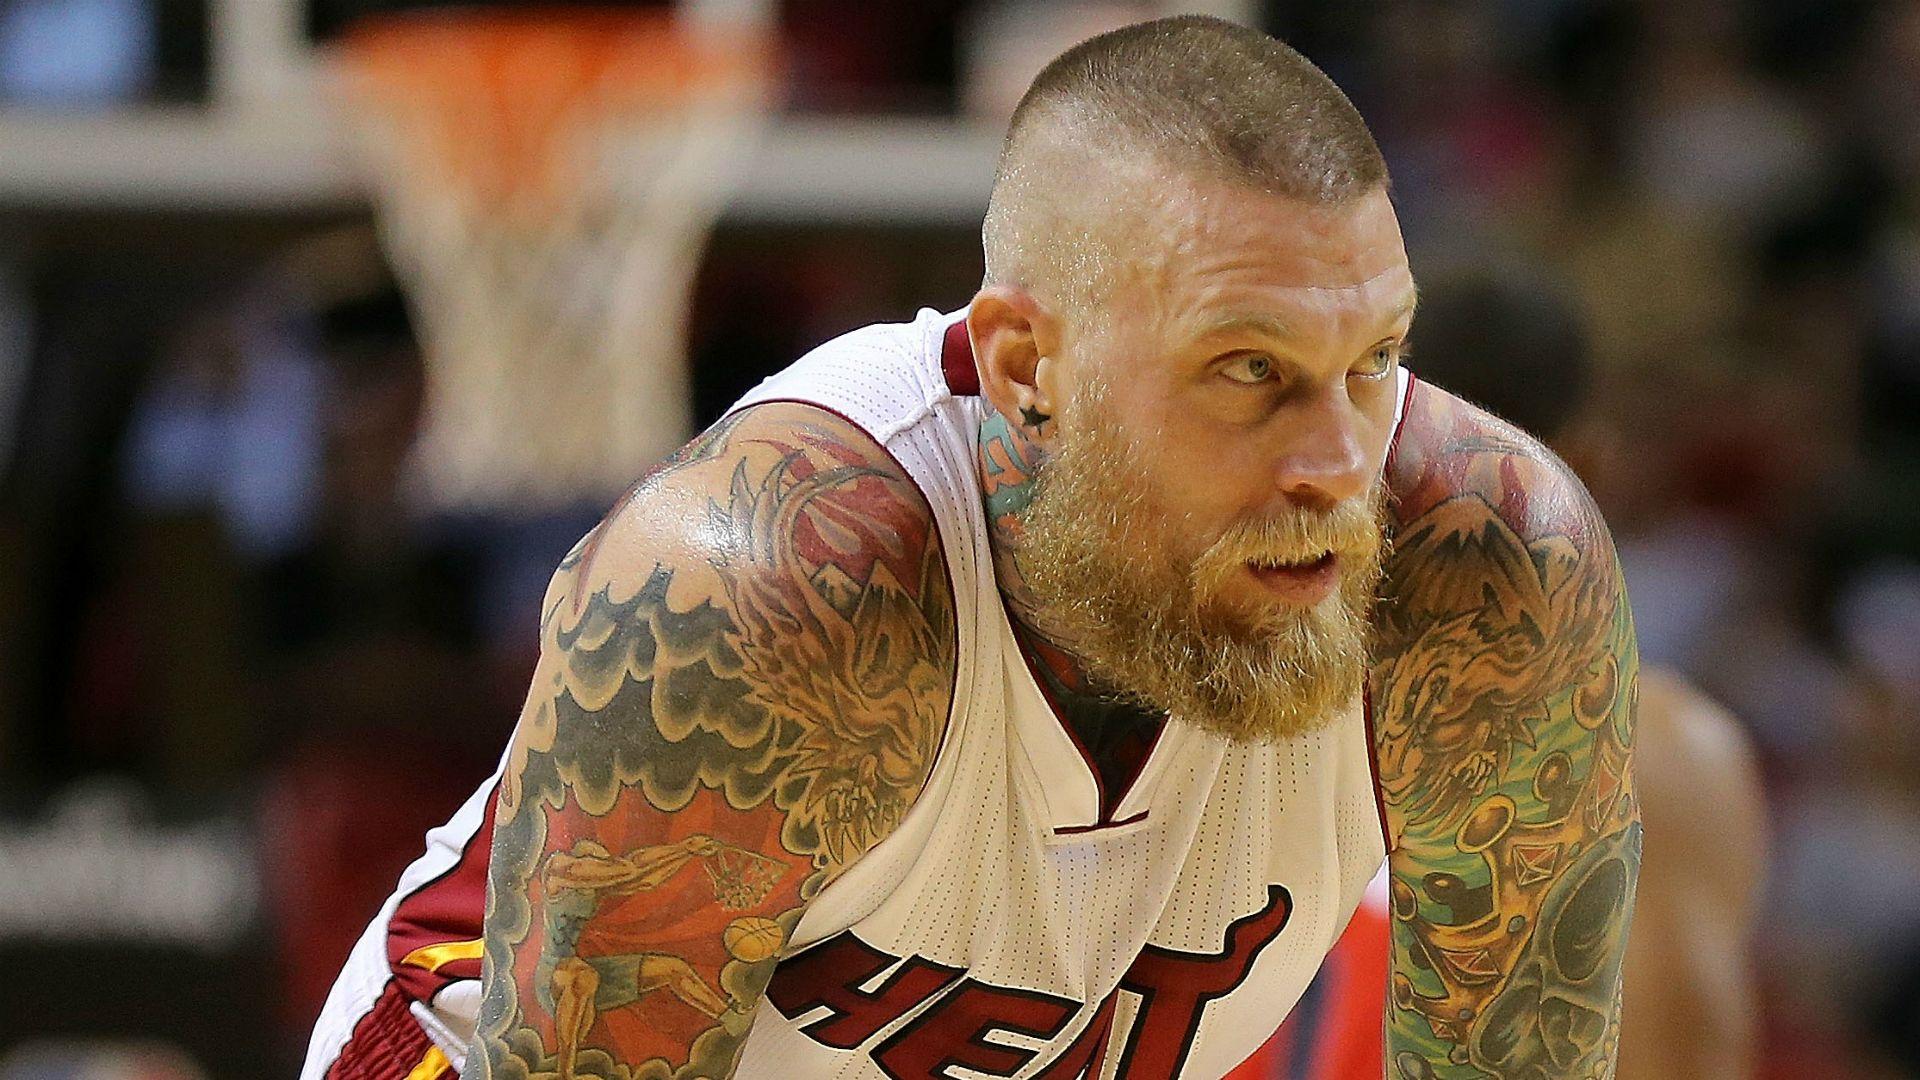 Birdman' as an old man: Heat's Chris Andersen grows into veteran